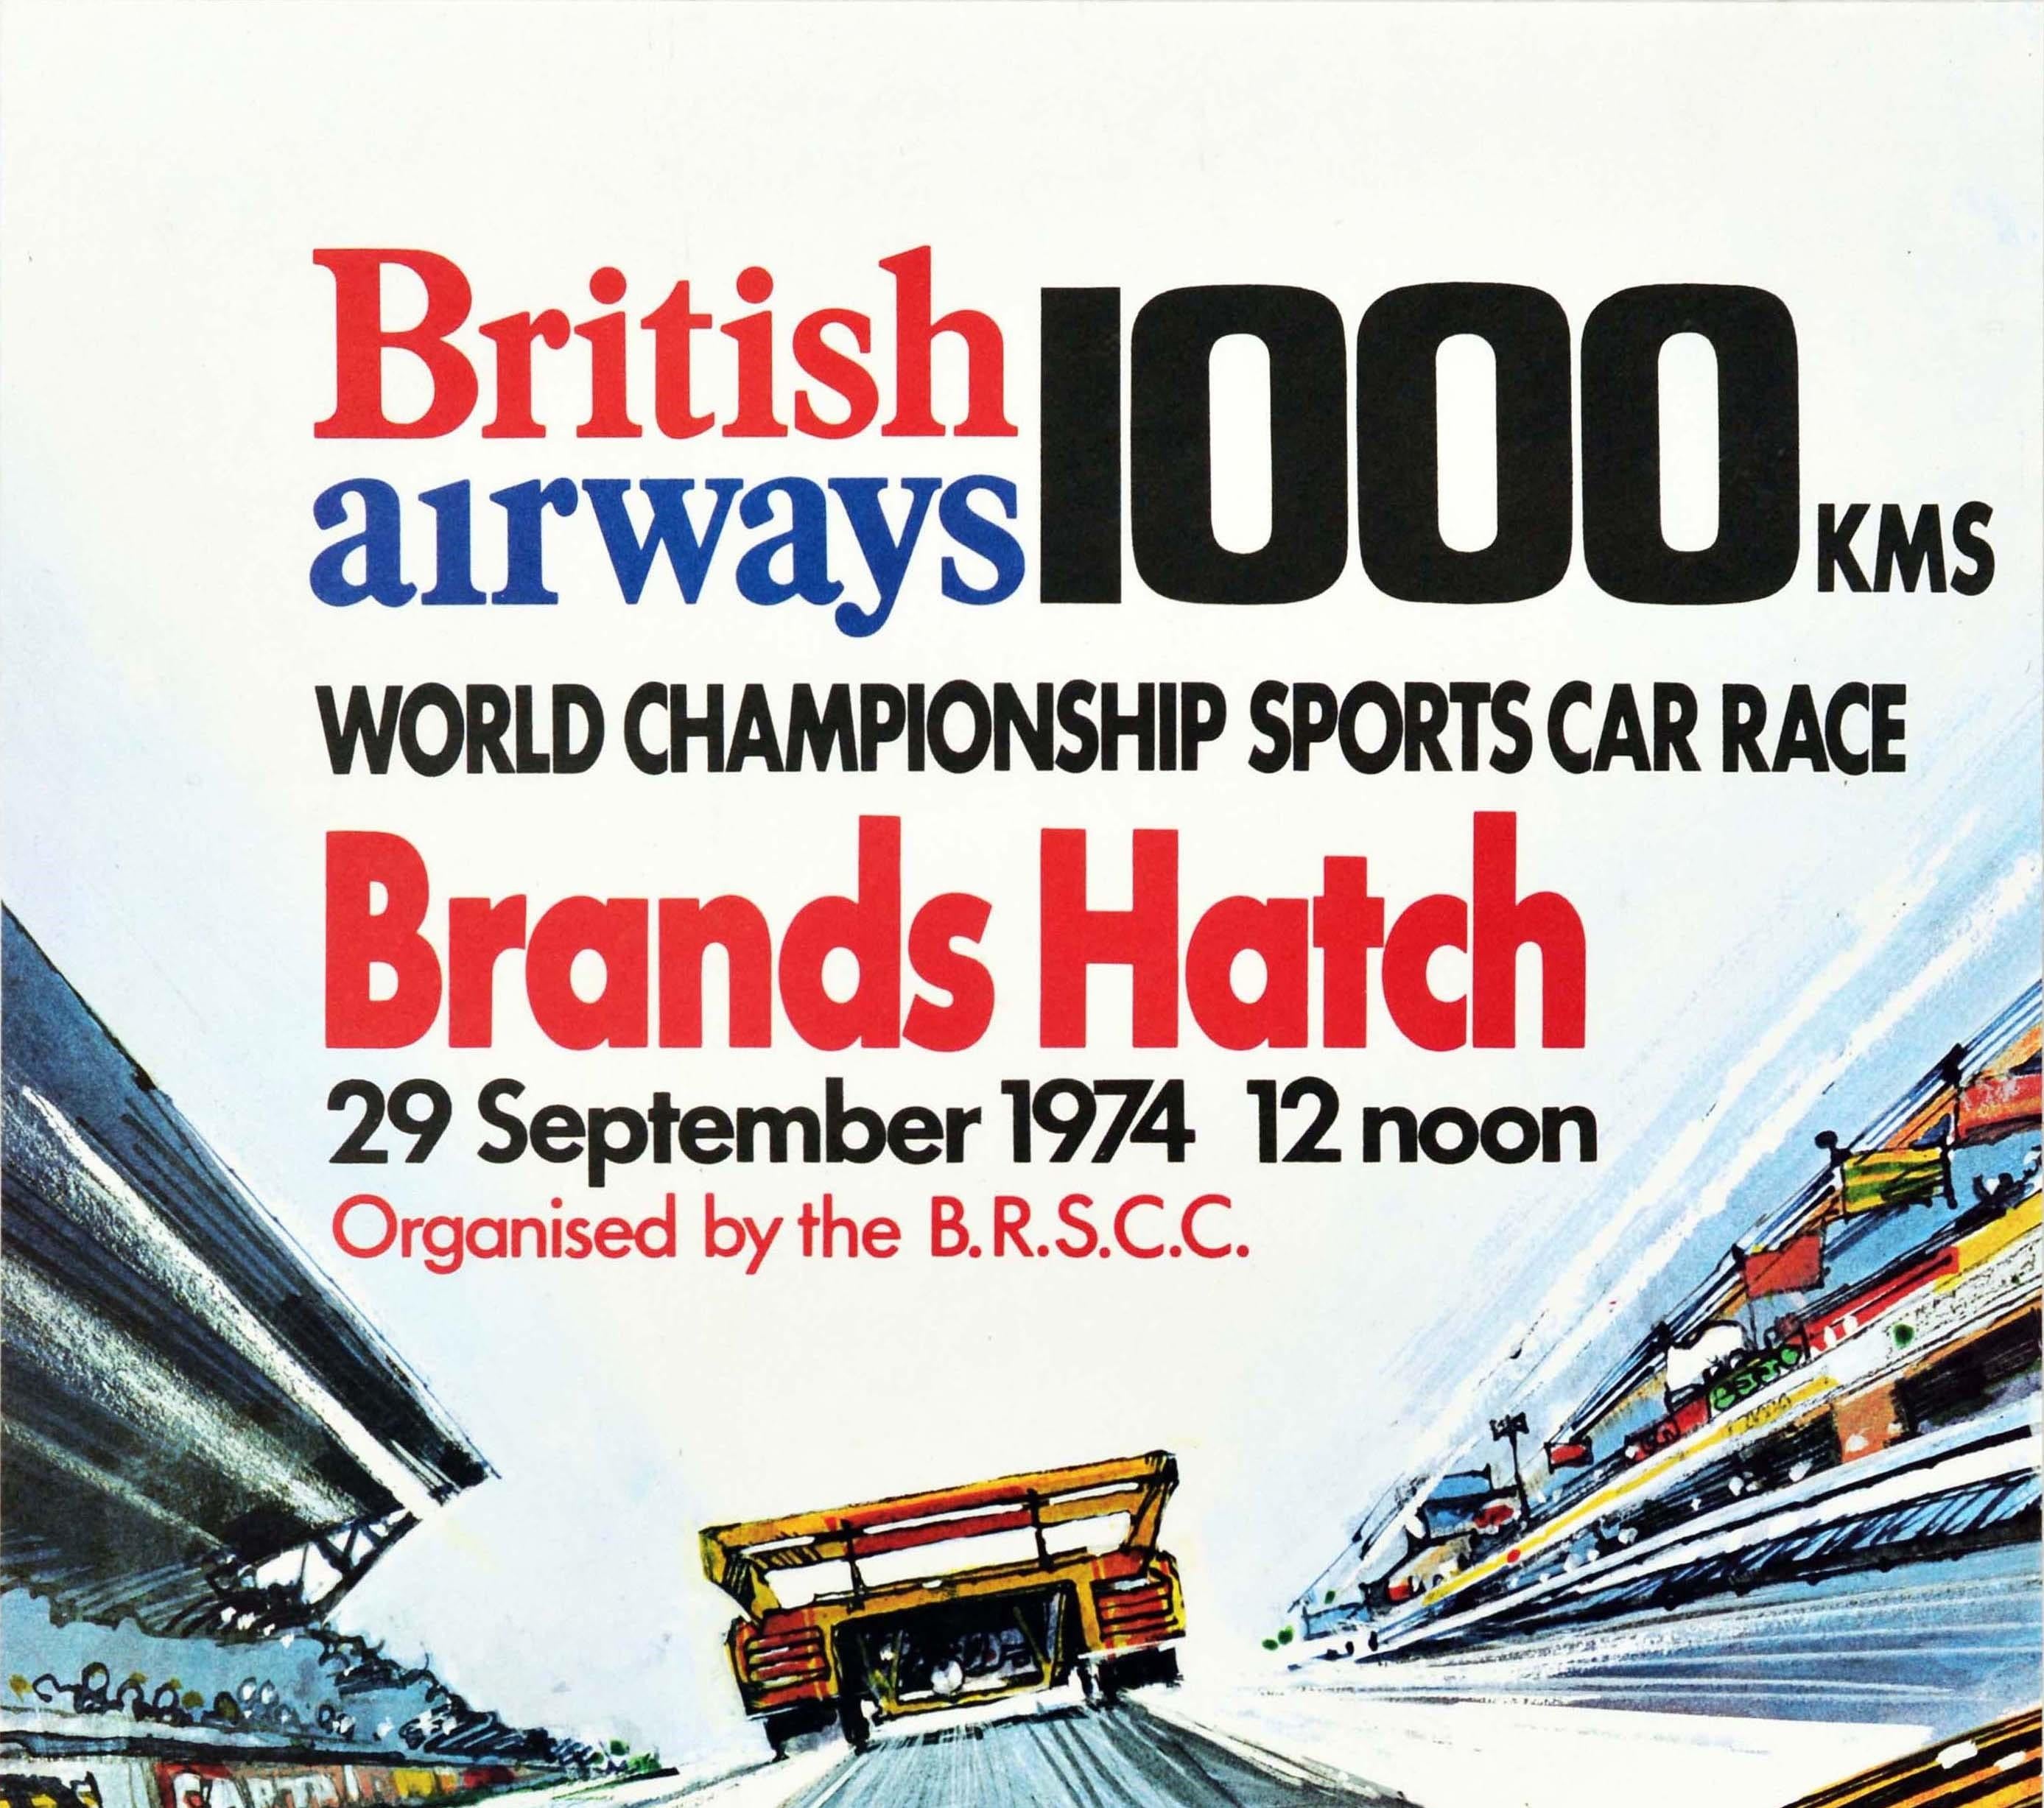 Original Vintage Poster Brands Hatch 1000kms World Championship Sports Car Race - Print by Unknown